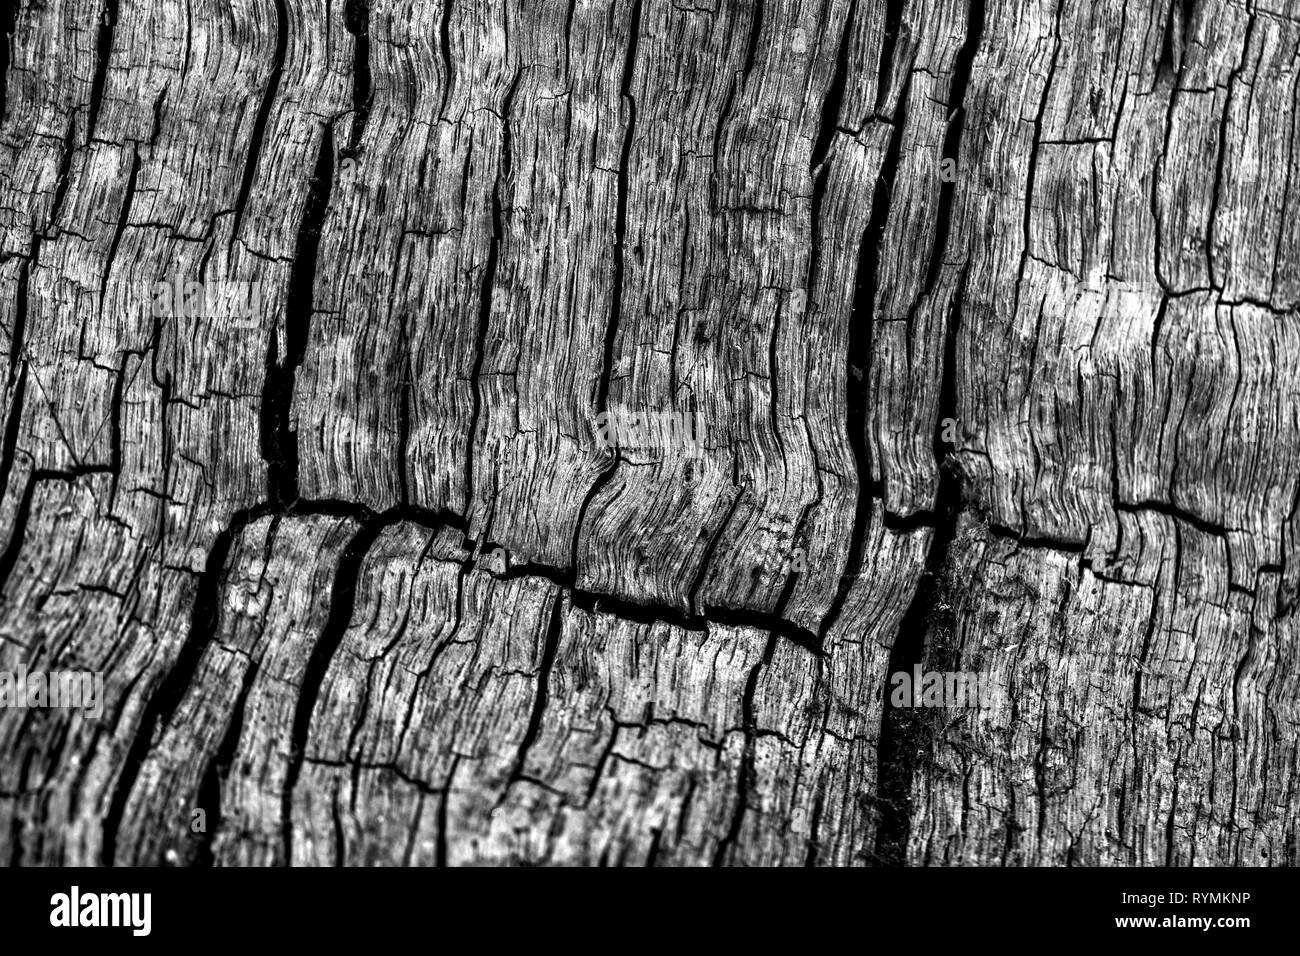 Strutture di corteccia, foresta Sababurg Urwald, Weser Uplands, Weserbergland, Hesse, Germania Foto Stock